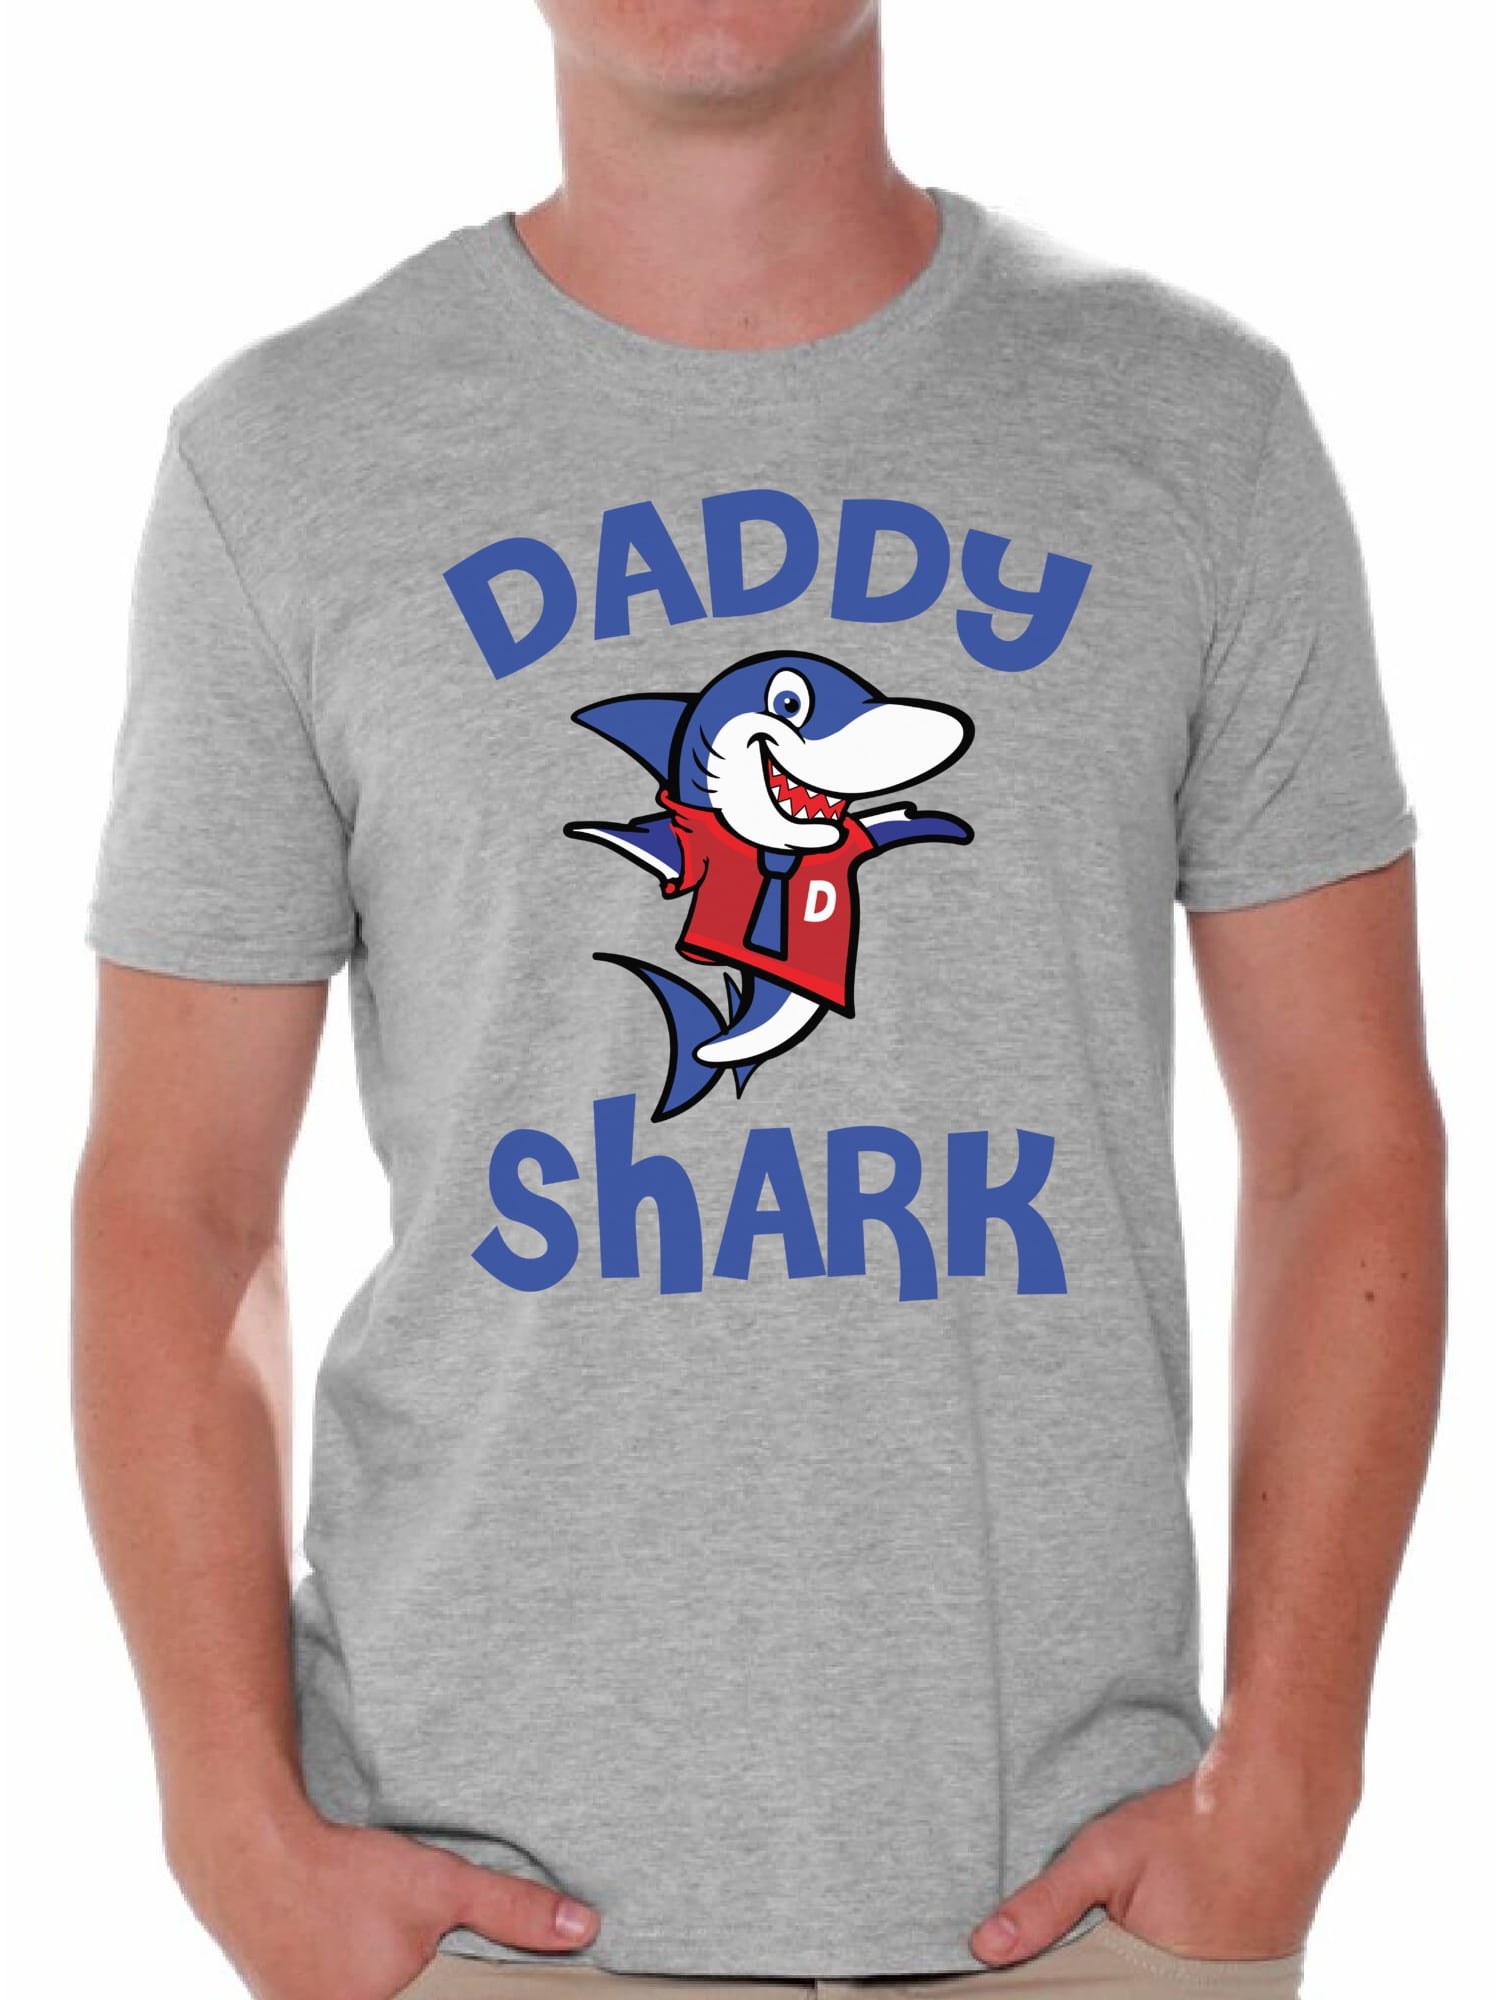 Sister Shark doo Doo Gift For Big Little Sister Youth Kids T-Shirt Dance Baby 